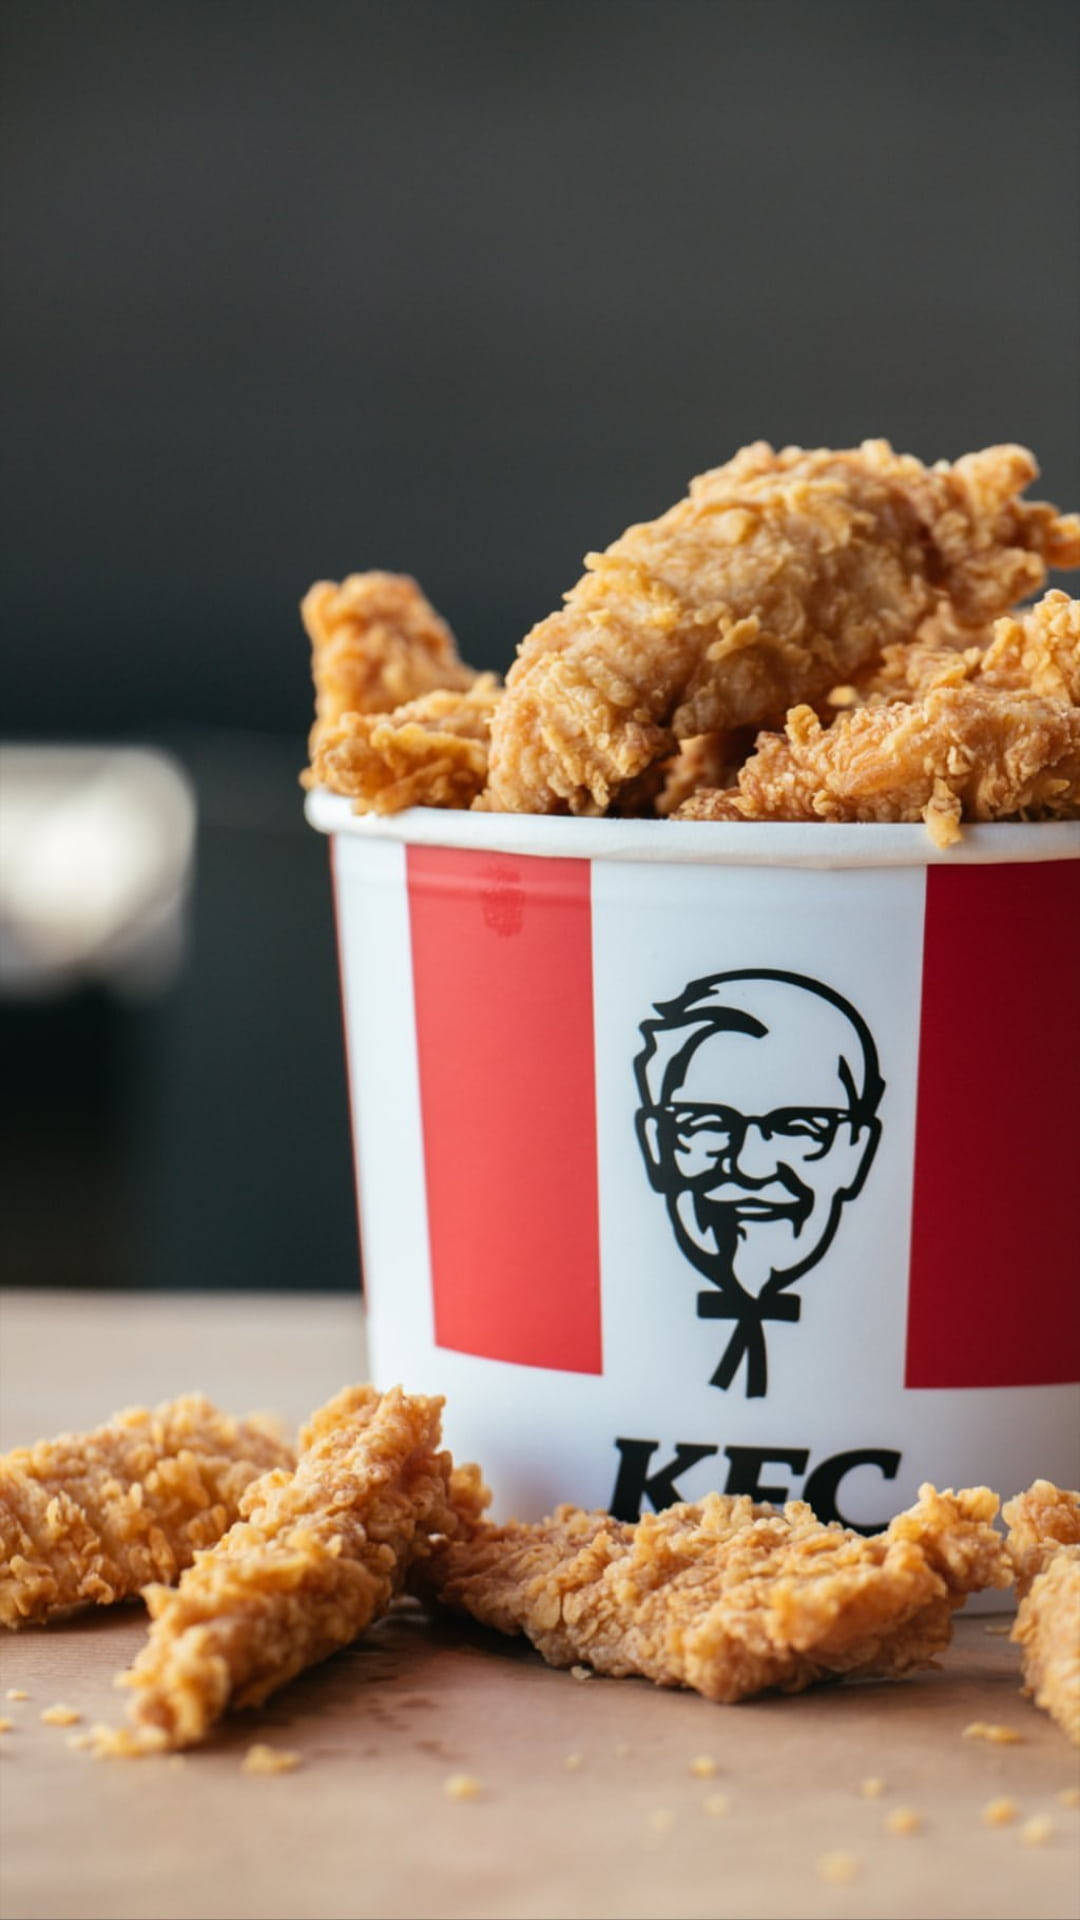 KFC Fried Chicken Bucket Wallpaper